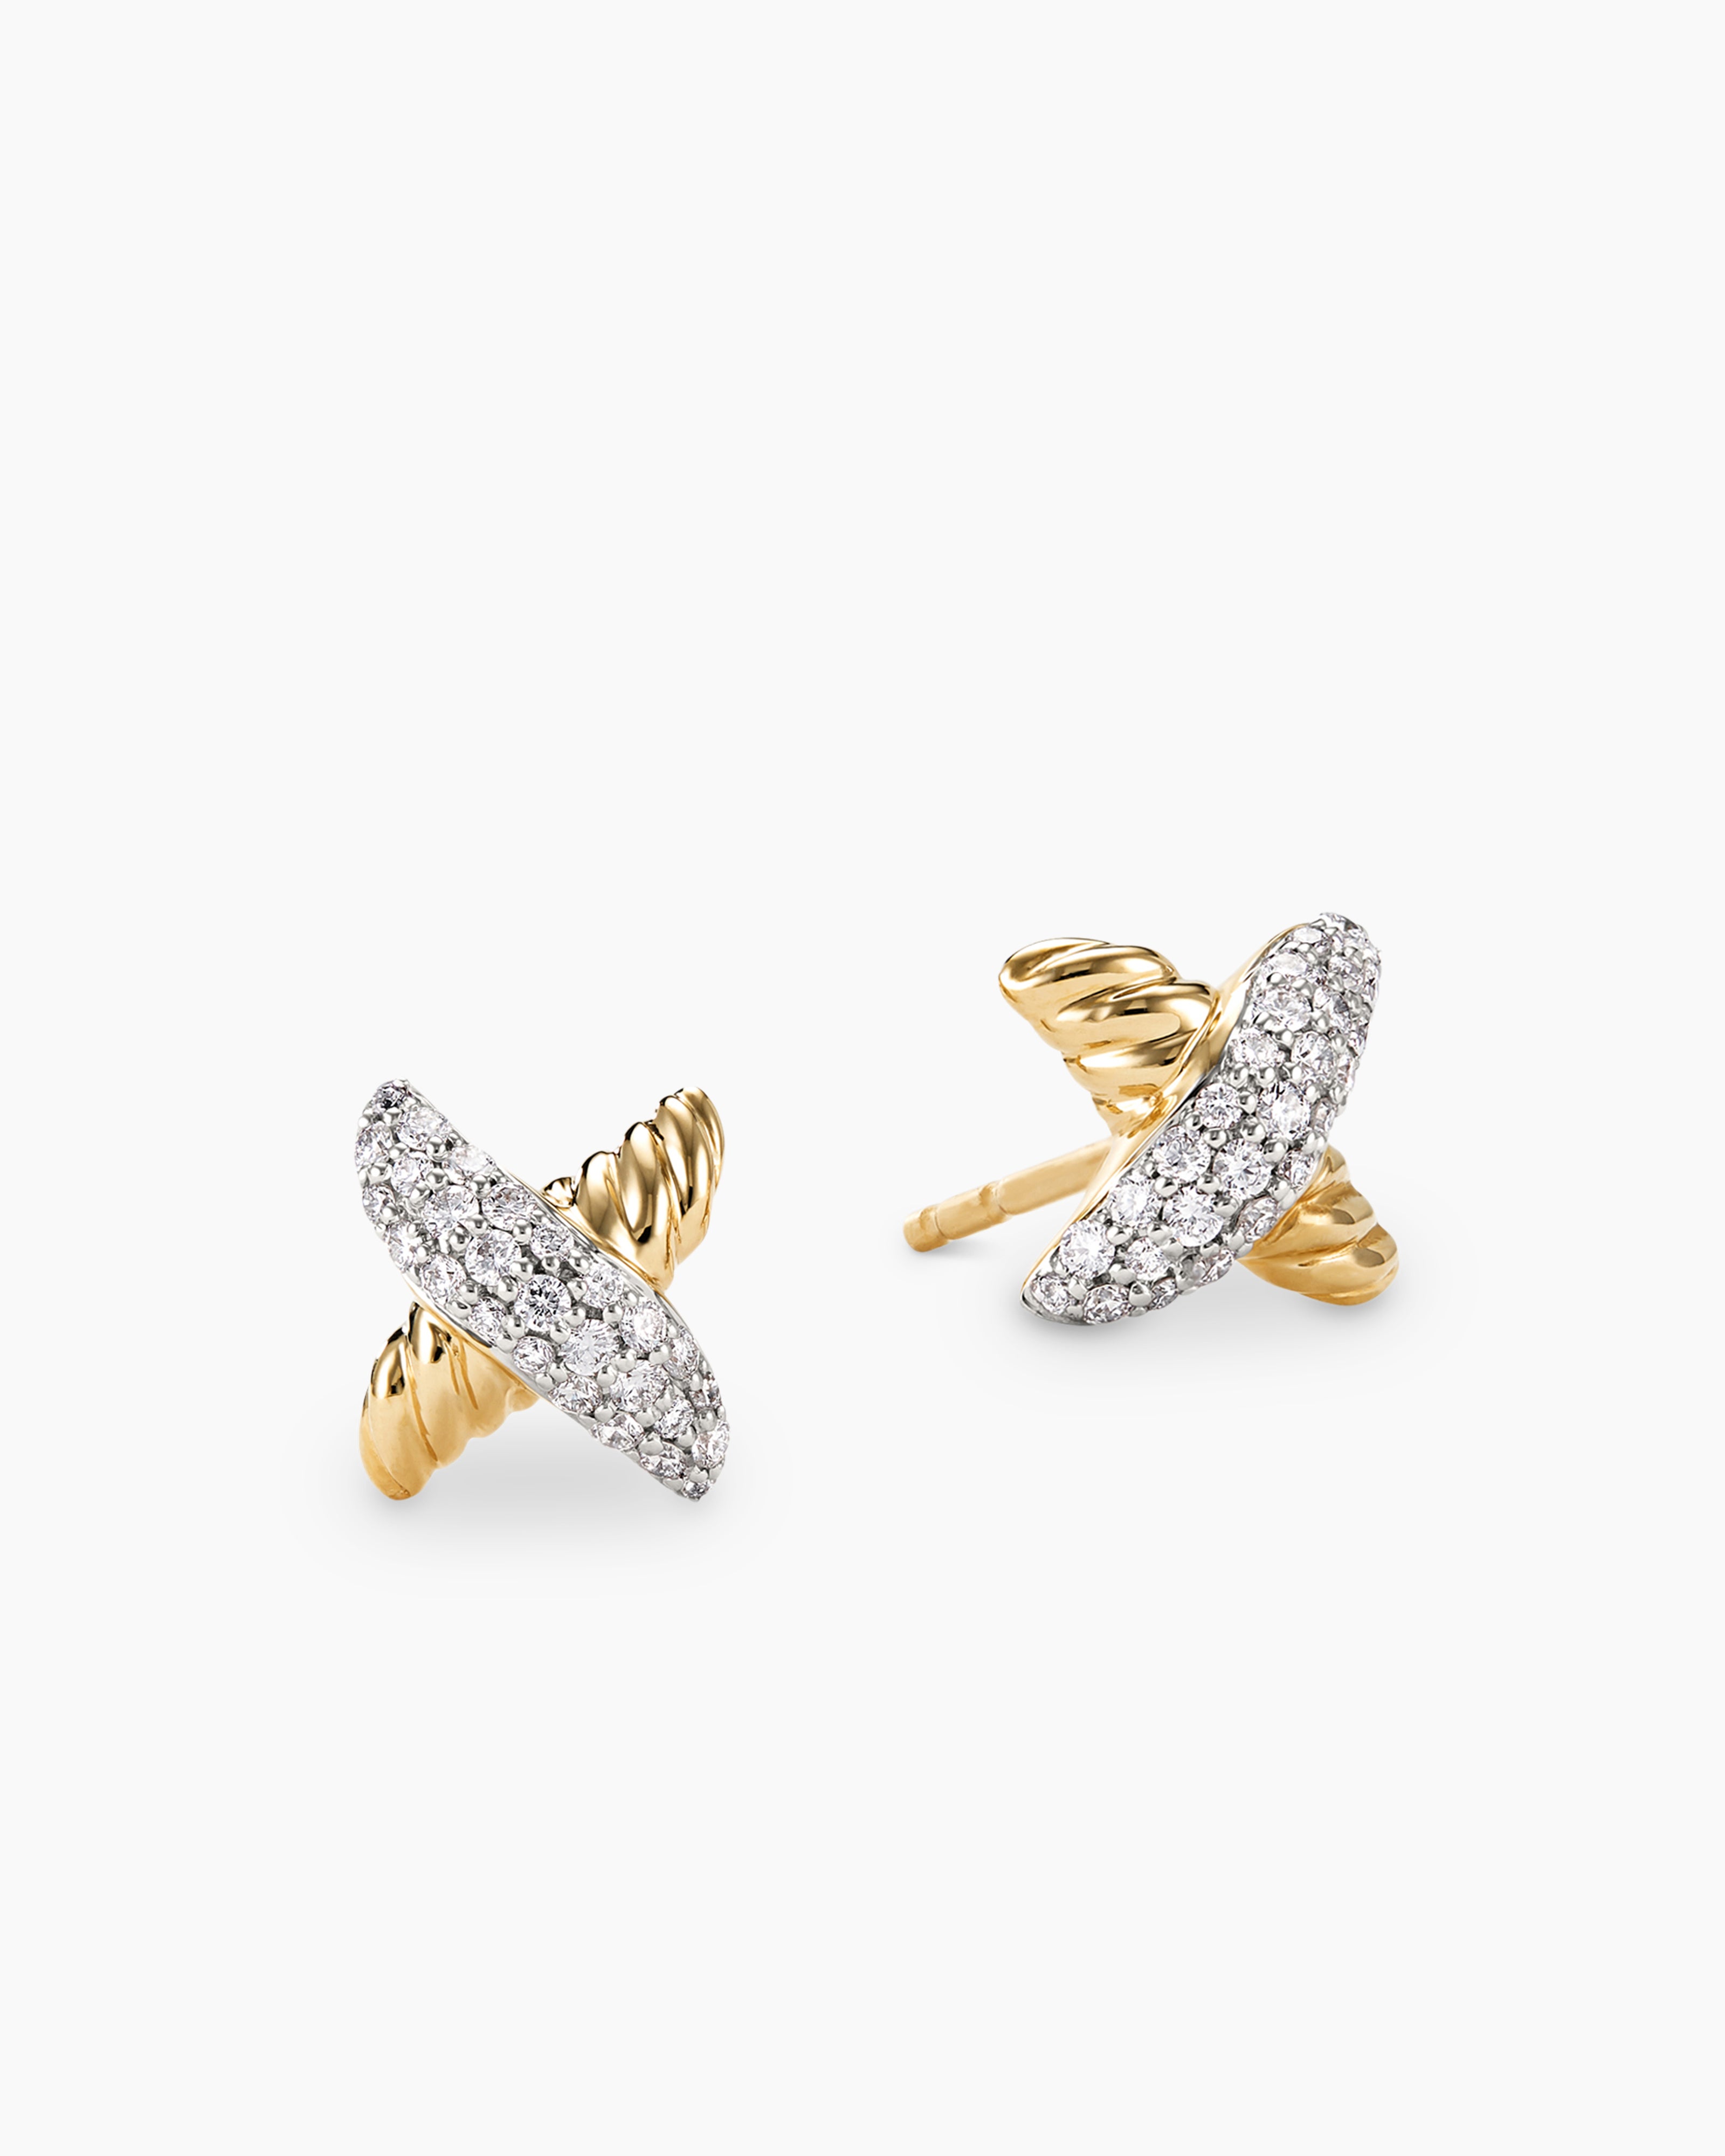 David Yurman x Earrings with Diamonds